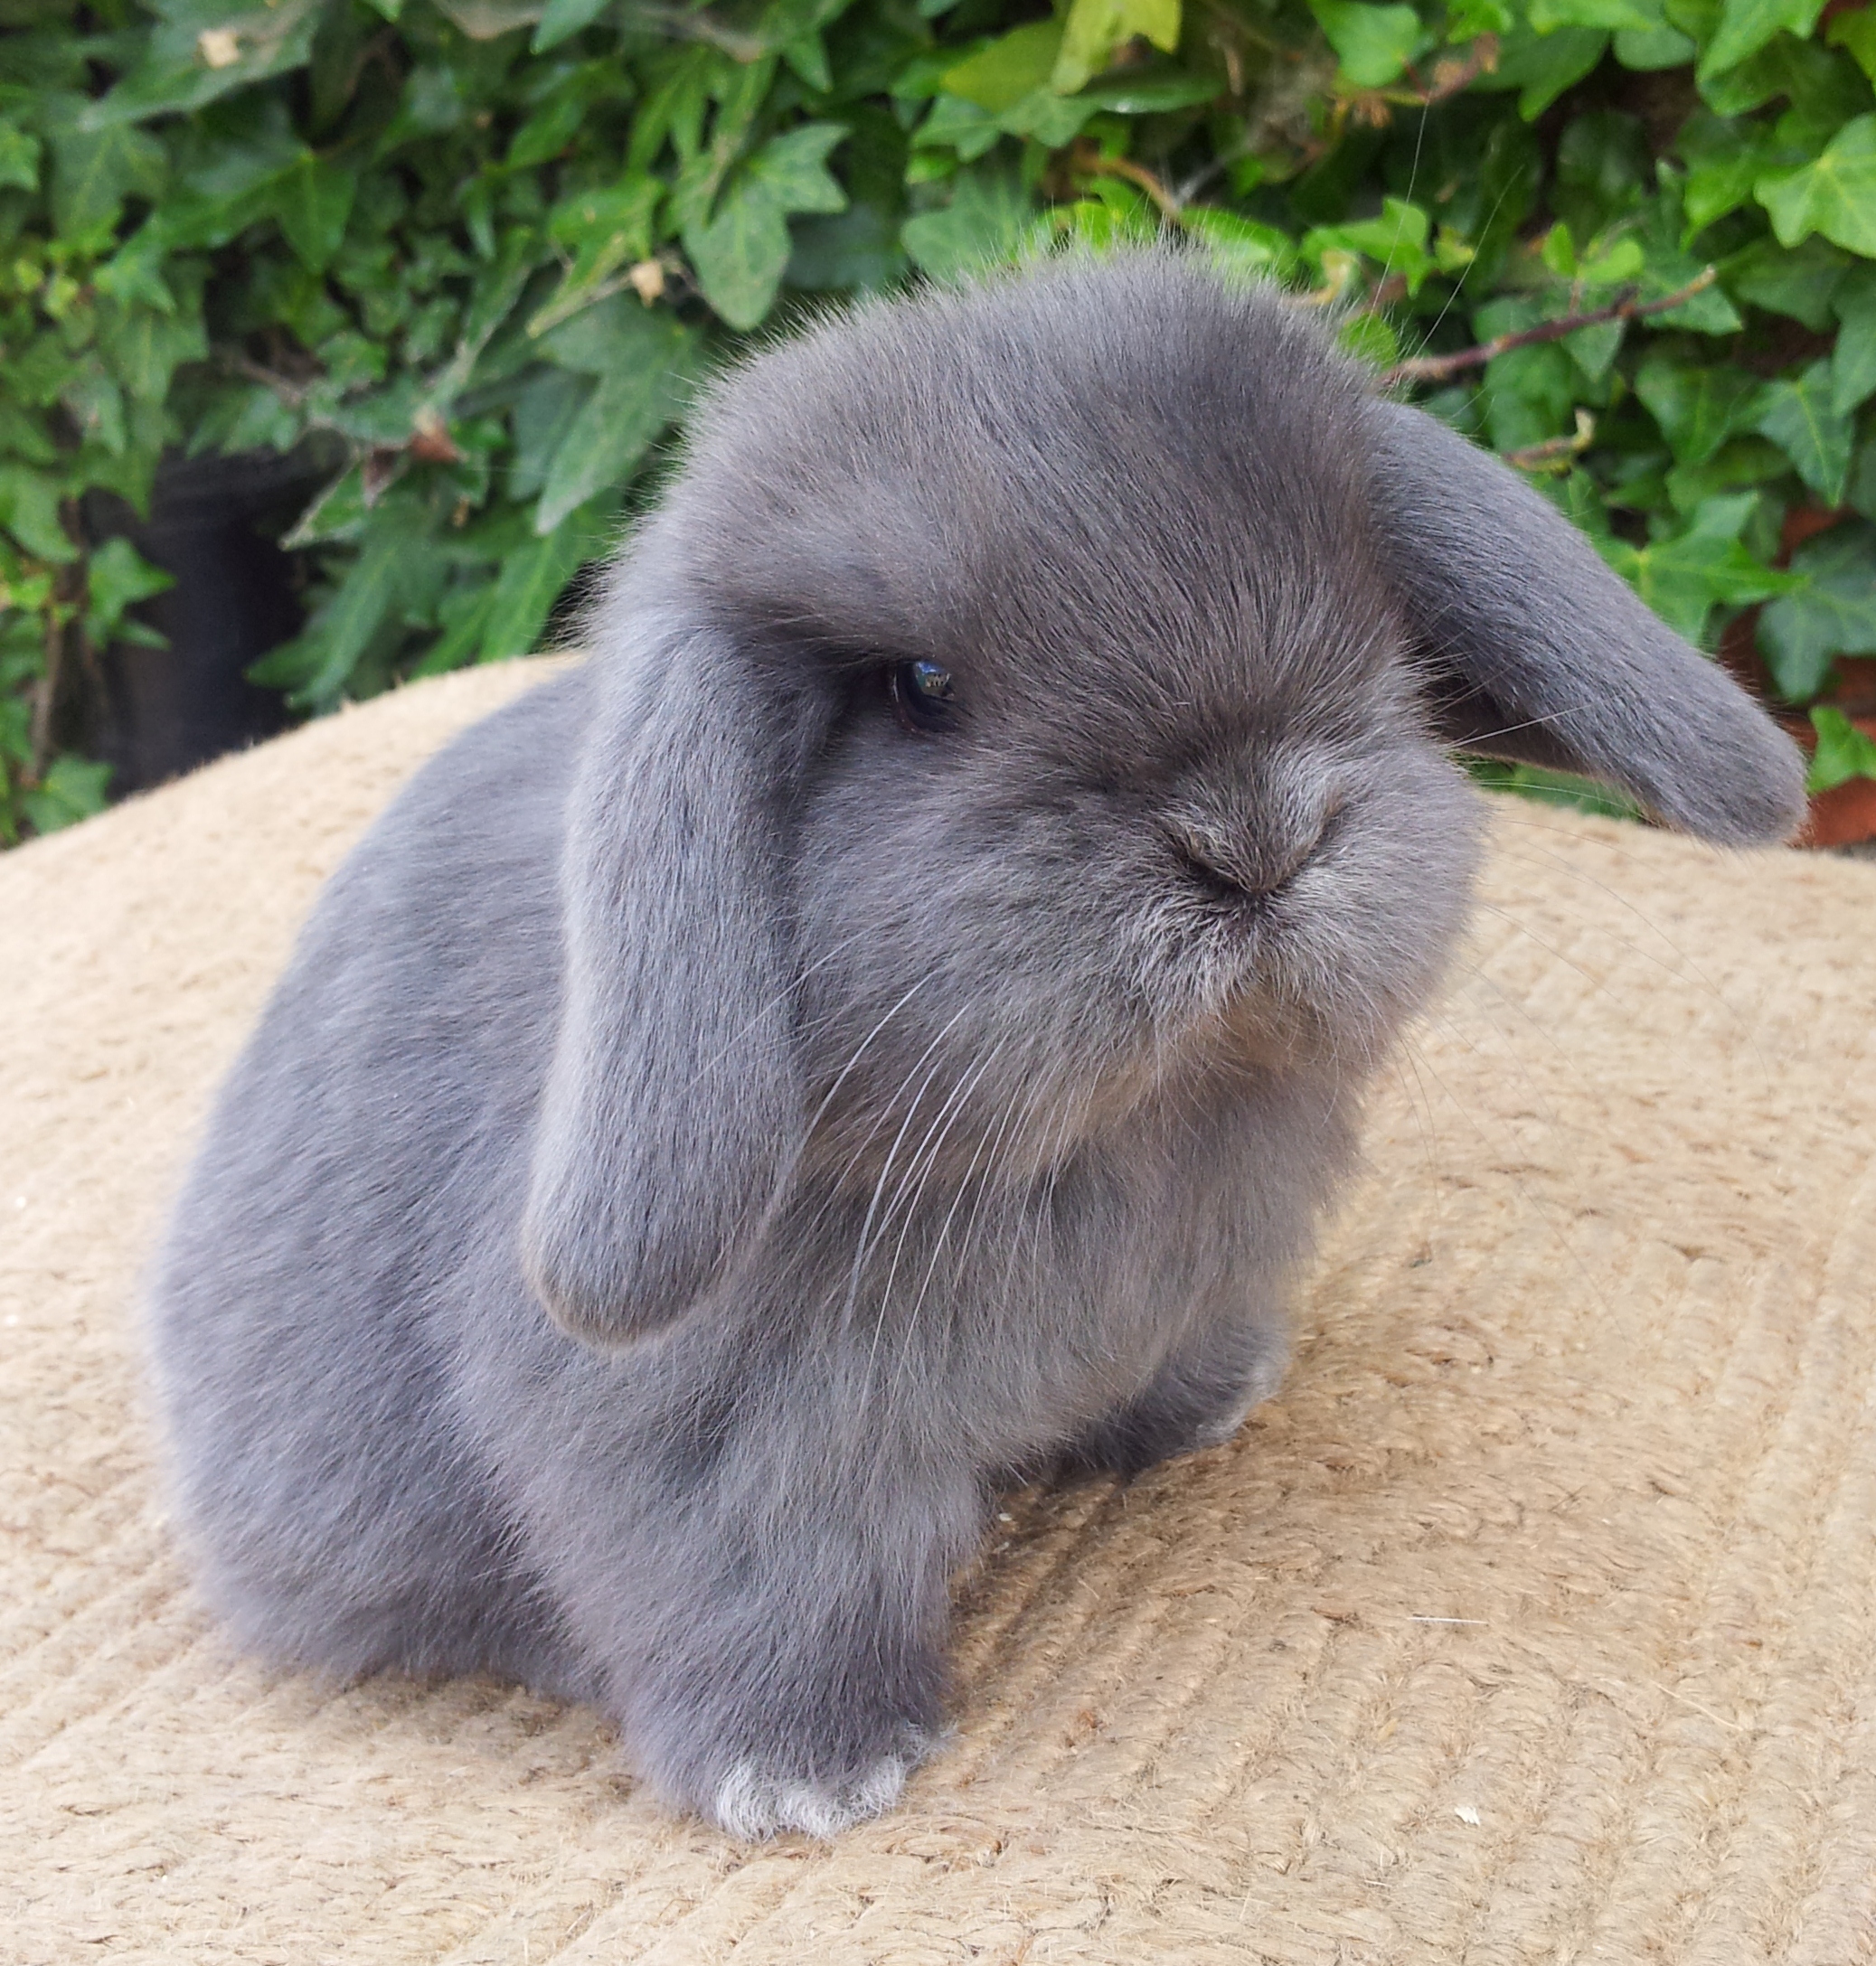 dwarf lop bunnies for sale near me